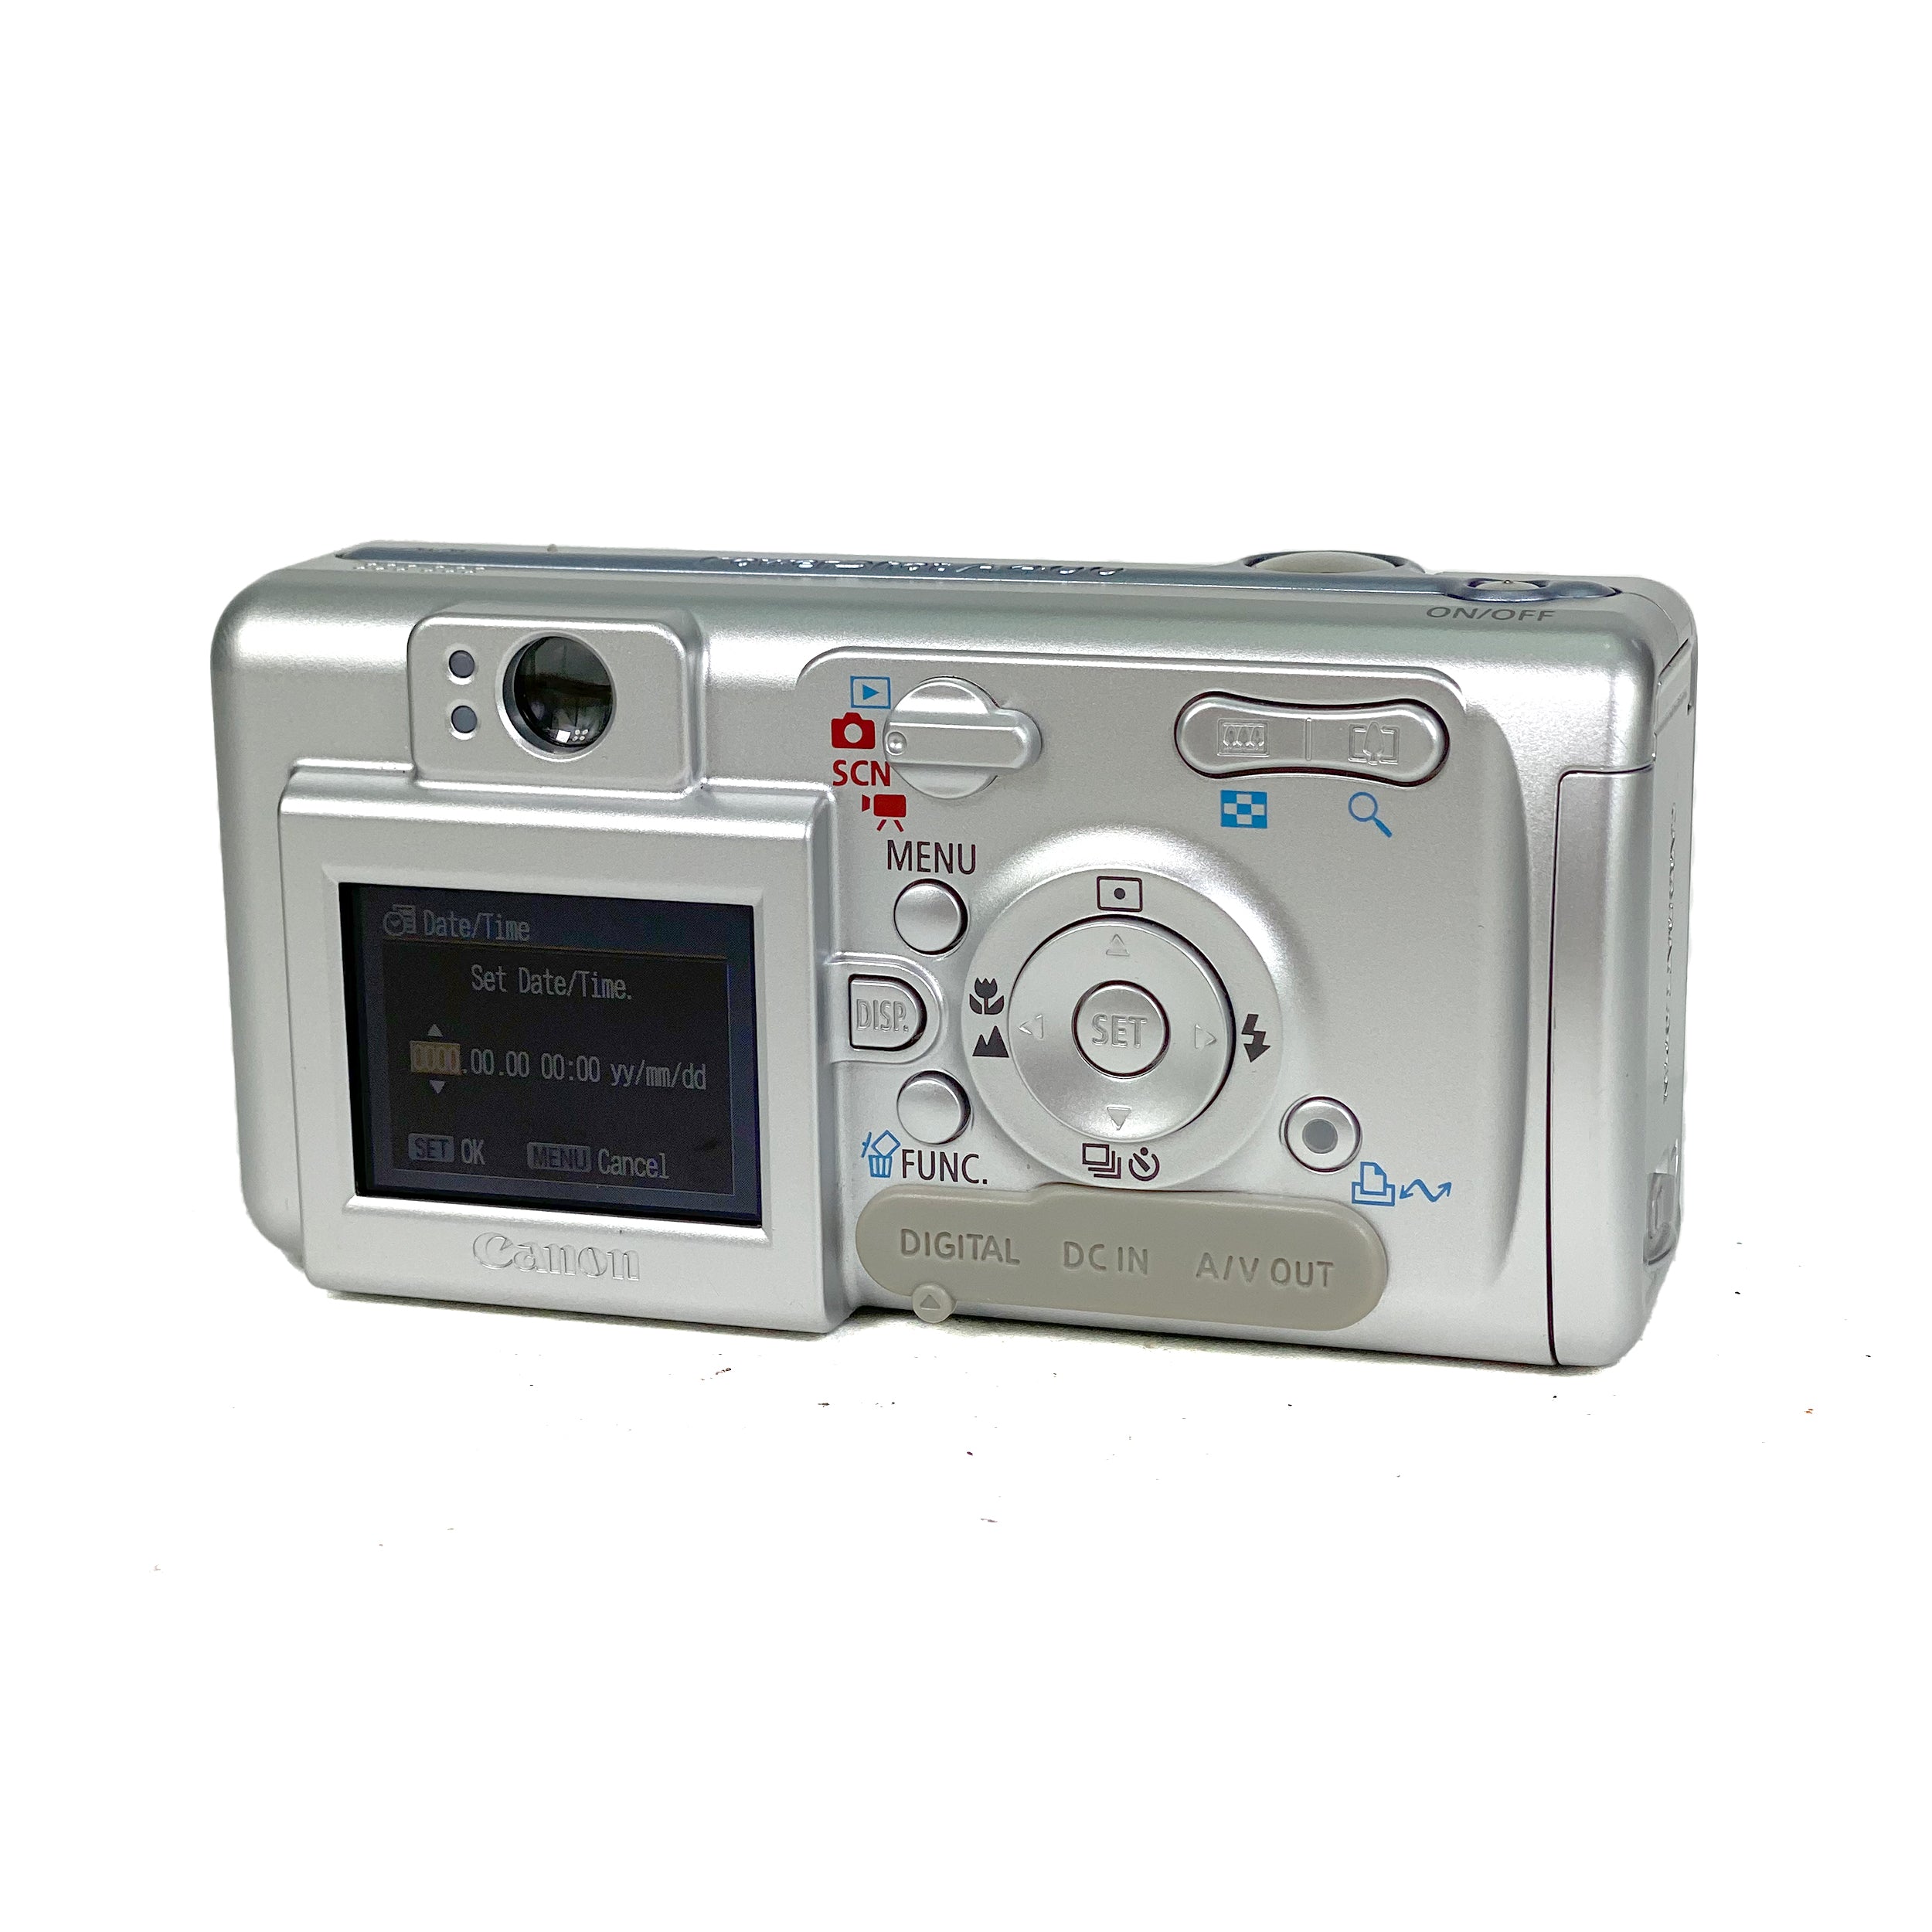 Canon PowerShot A400 Digital Compact